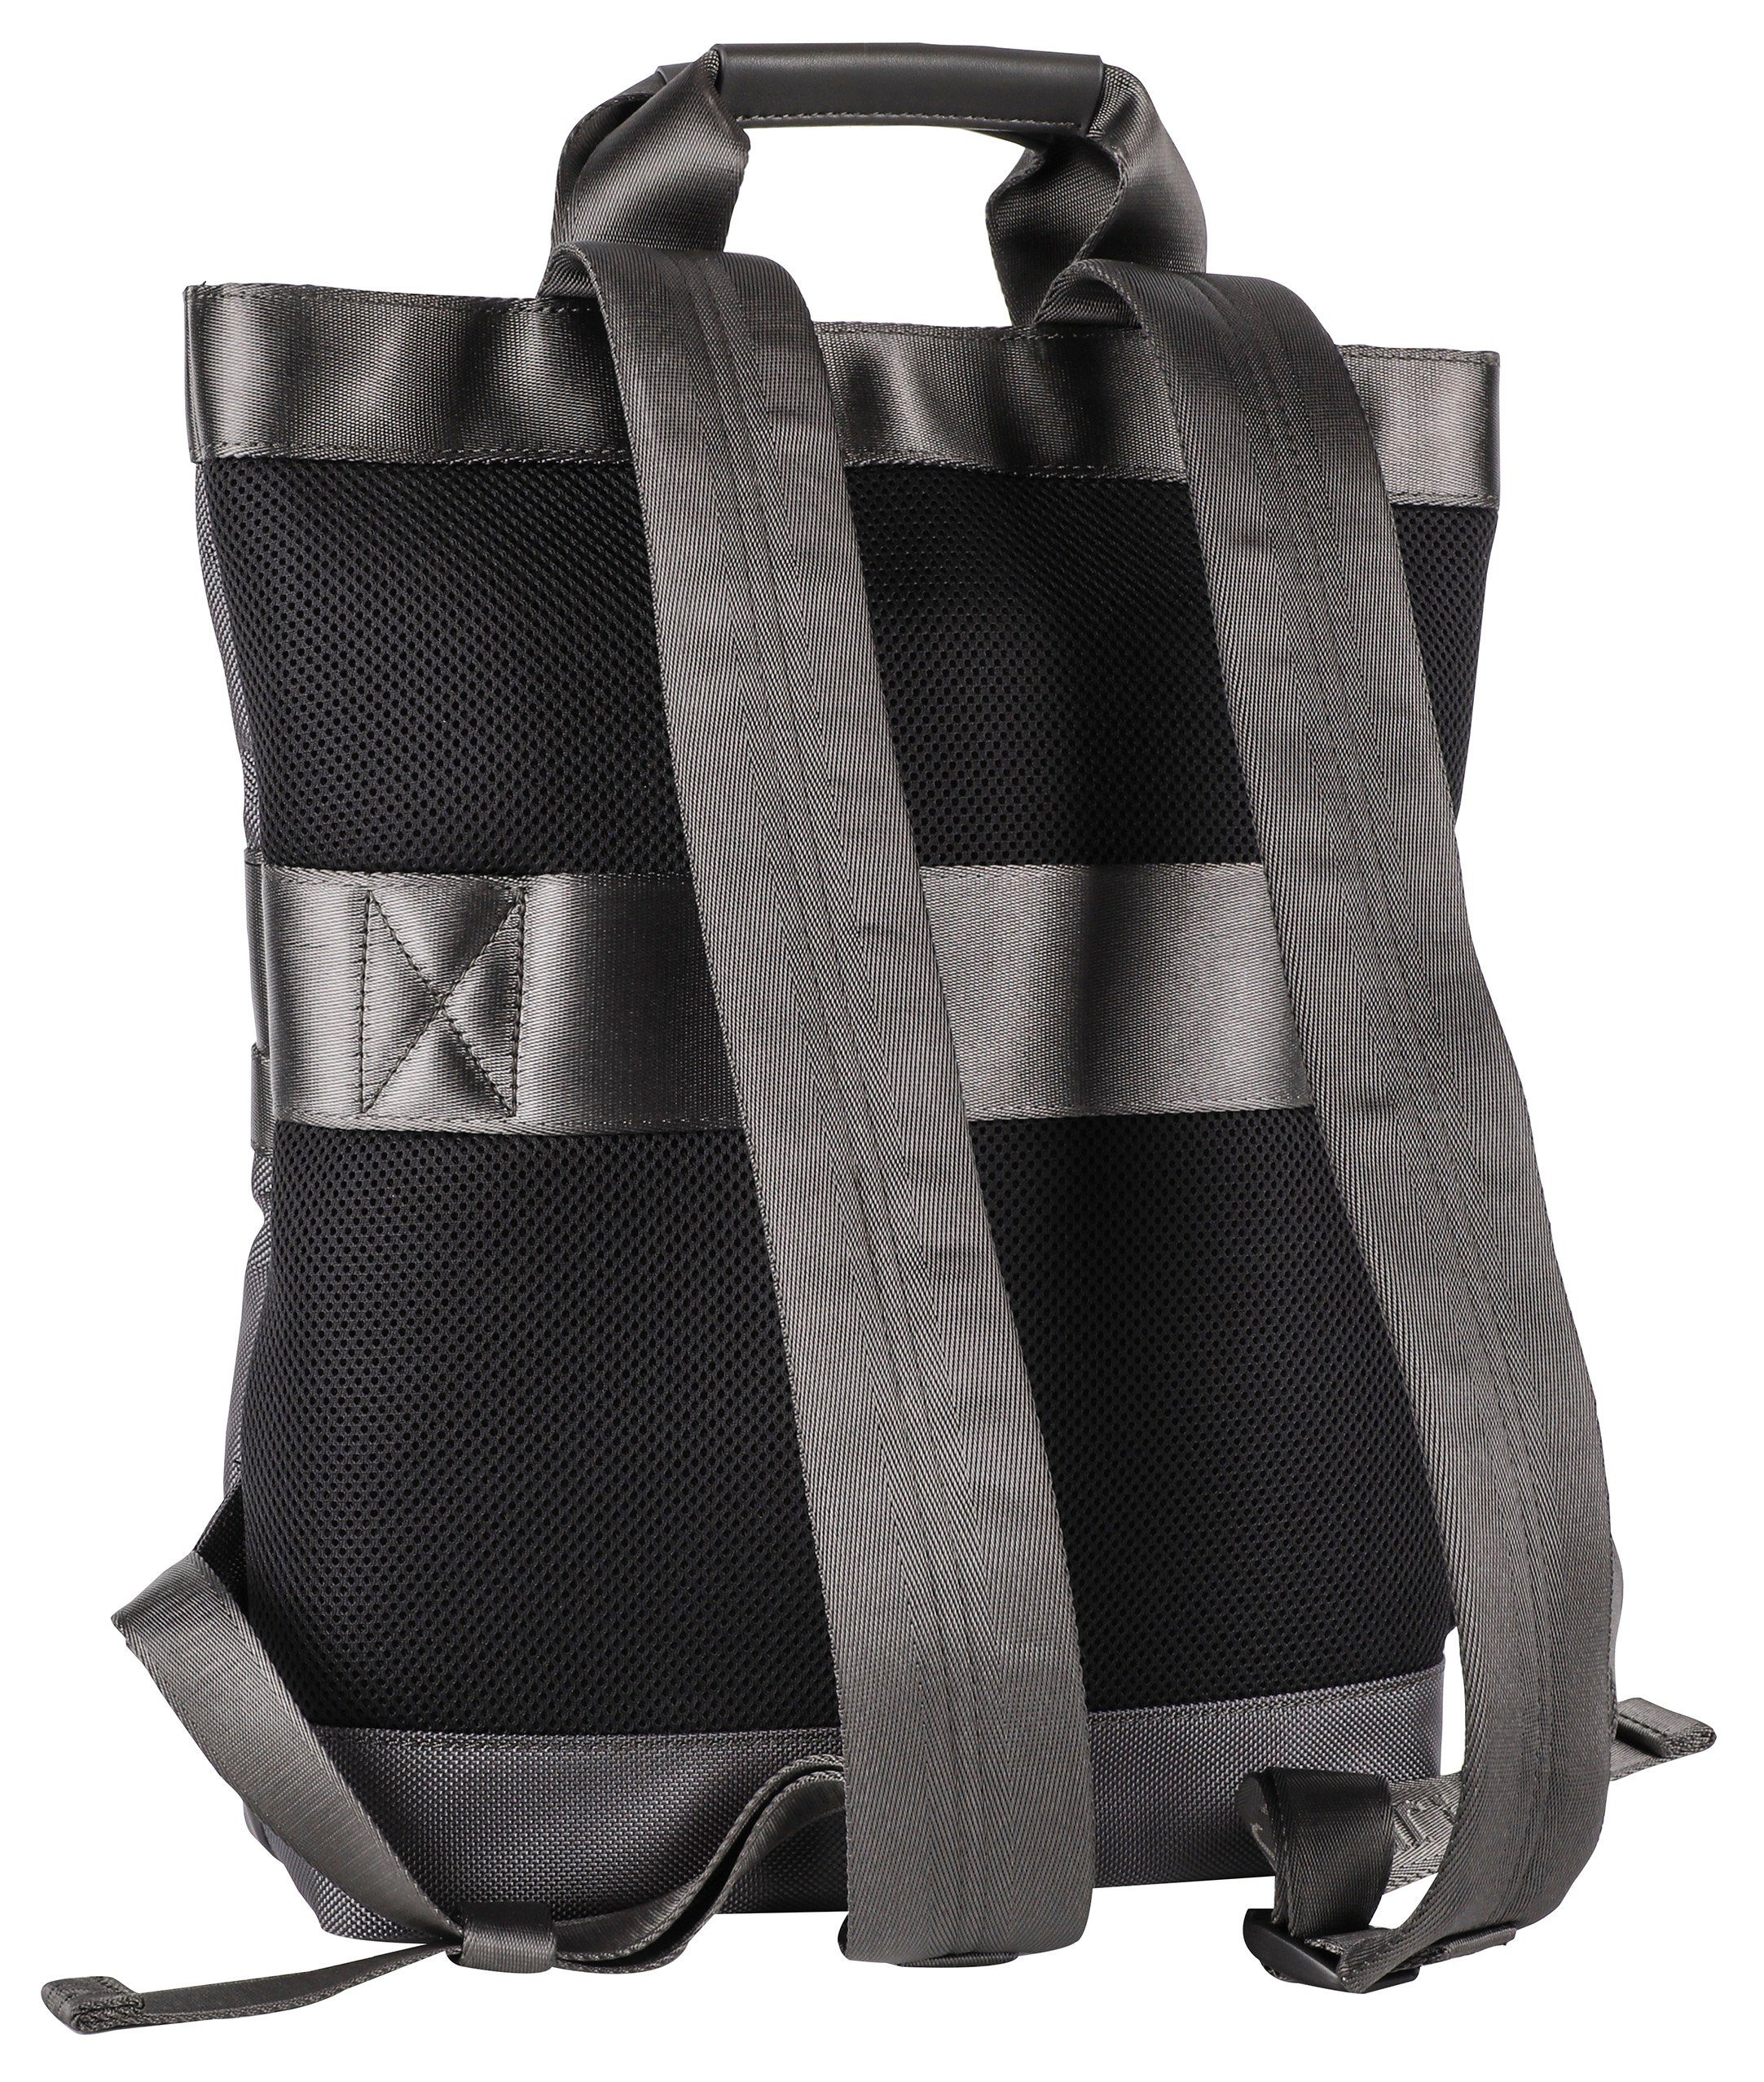 Joop Jeans Cityrucksack falk modica svz, dunkelgrau mit Reißverschluss-Vortasche backpack